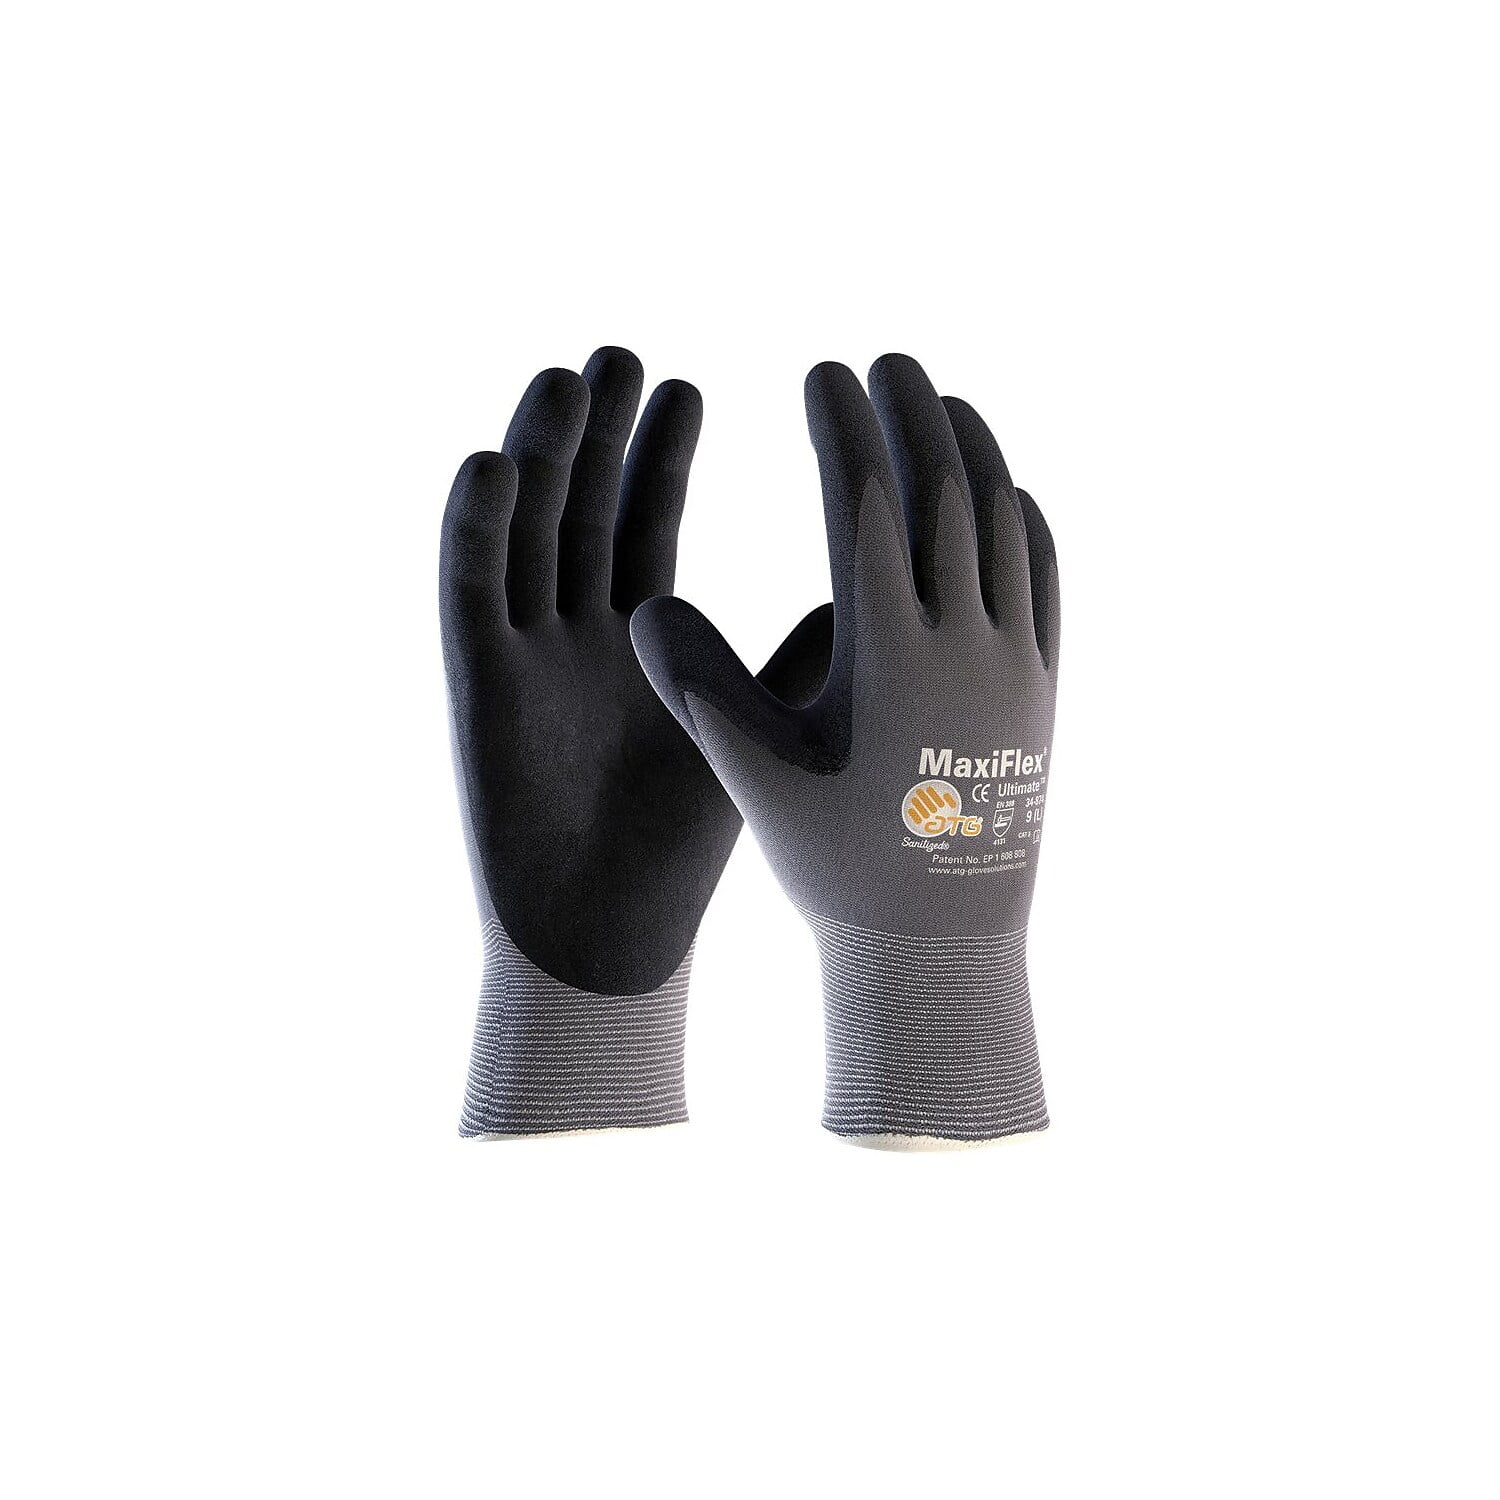 Pick Size GTek 34-874 MaxiFlex Ultimate Nitrile Foam Coated Gloves,6 Pair Pack 